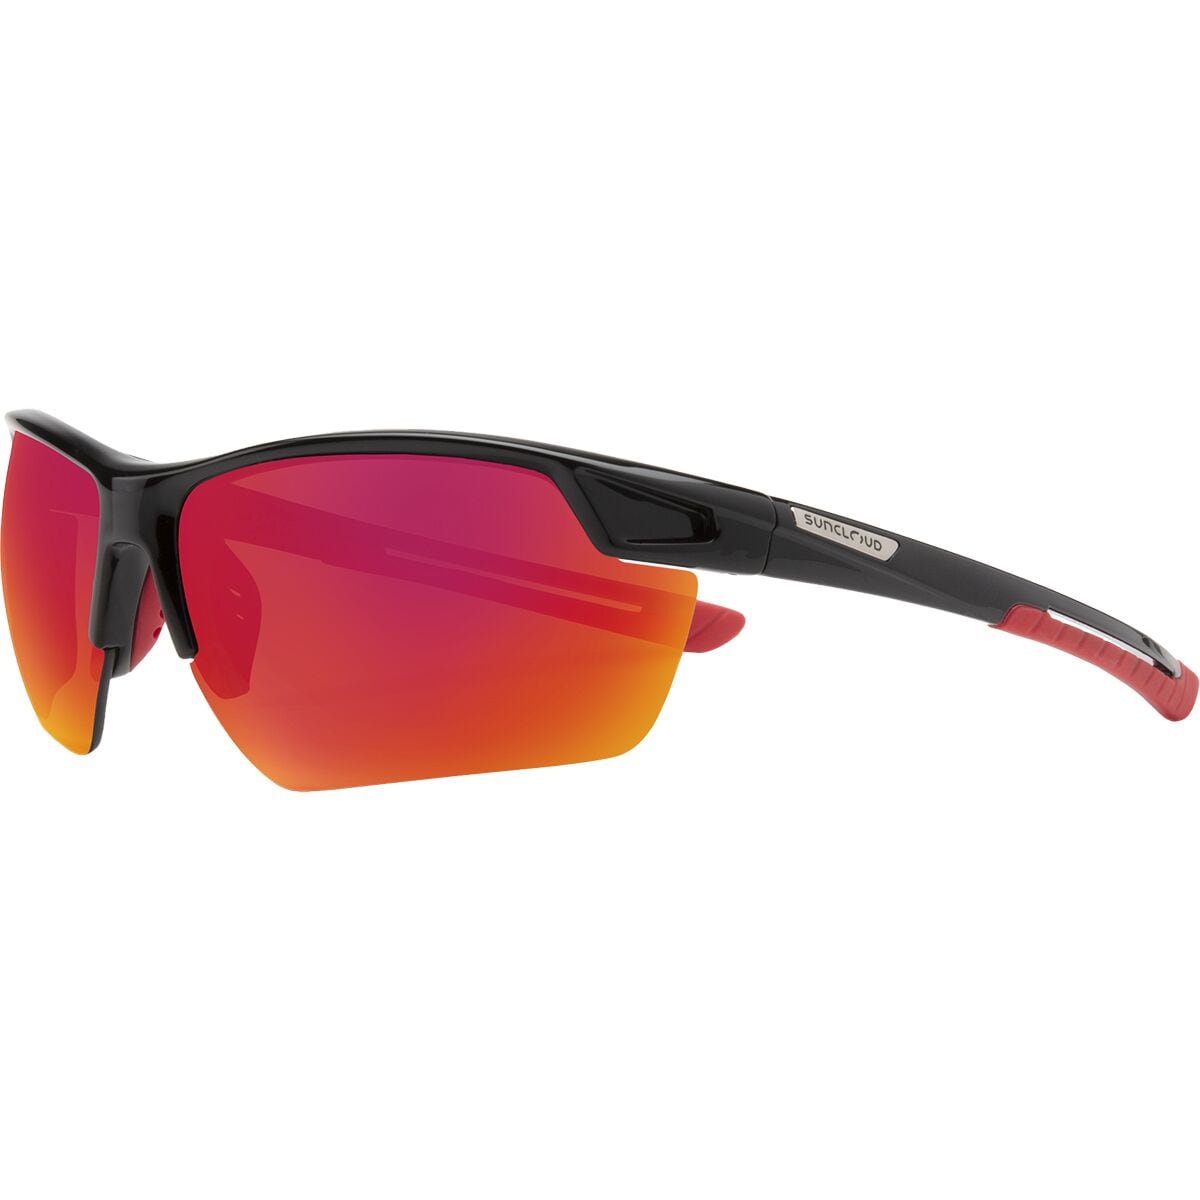 Поляризованные солнцезащитные очки contender Suncloud Polarized Optics, цвет black/polarized red mirror очки солнцезащитные stylemark polarized l1505d